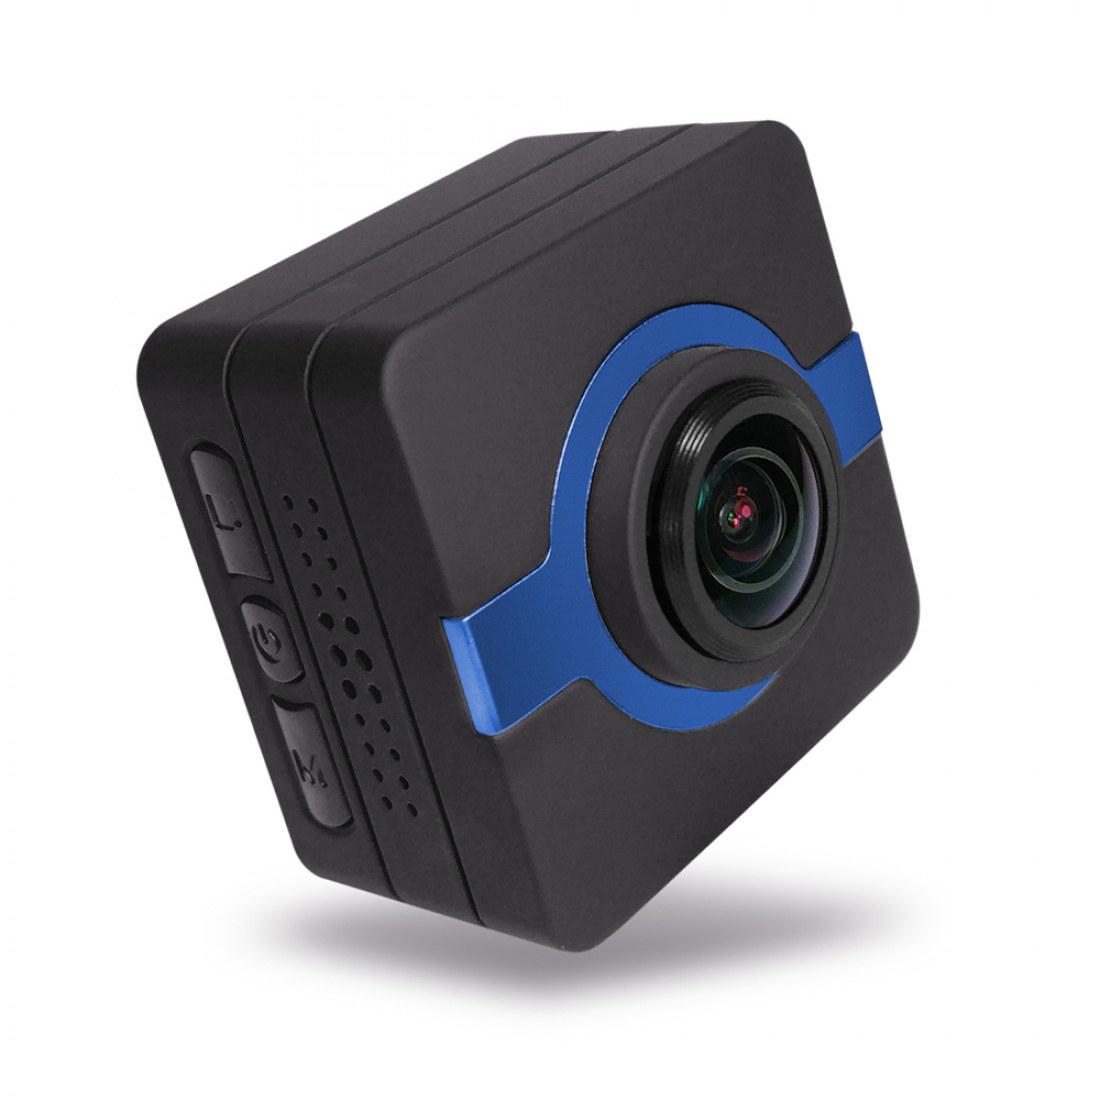 Matecam X1 Araba Pano Kamera Kamera Kaydedici WIFI Spor Aksiyon Kamerası 4K-HI Ultra HD Su Geçirmez DV Video Kamera 16MP 160 Derece Geniş Açı WIFI/G-Sensor/Gyro Stabilizasyon/Hareket Algılama/Uzaktan kumanda RC kamera Bisiklet Kask Kamera Donanma